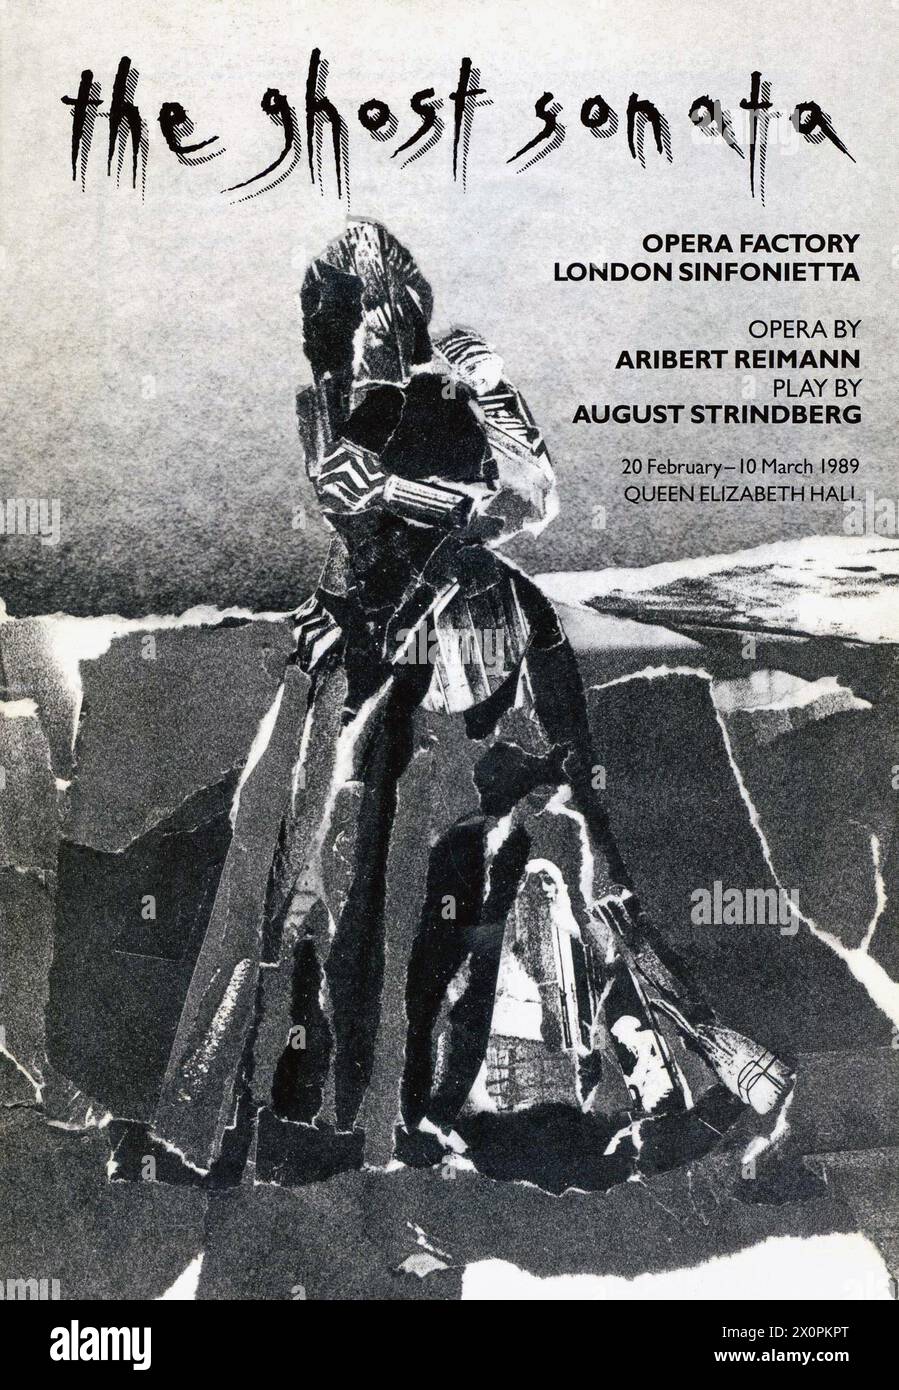 Opera Programme Cover. 'The Ghost Sonata' by Aribert Reimann. Opera Factory London Sinfonietta. Stock Photo